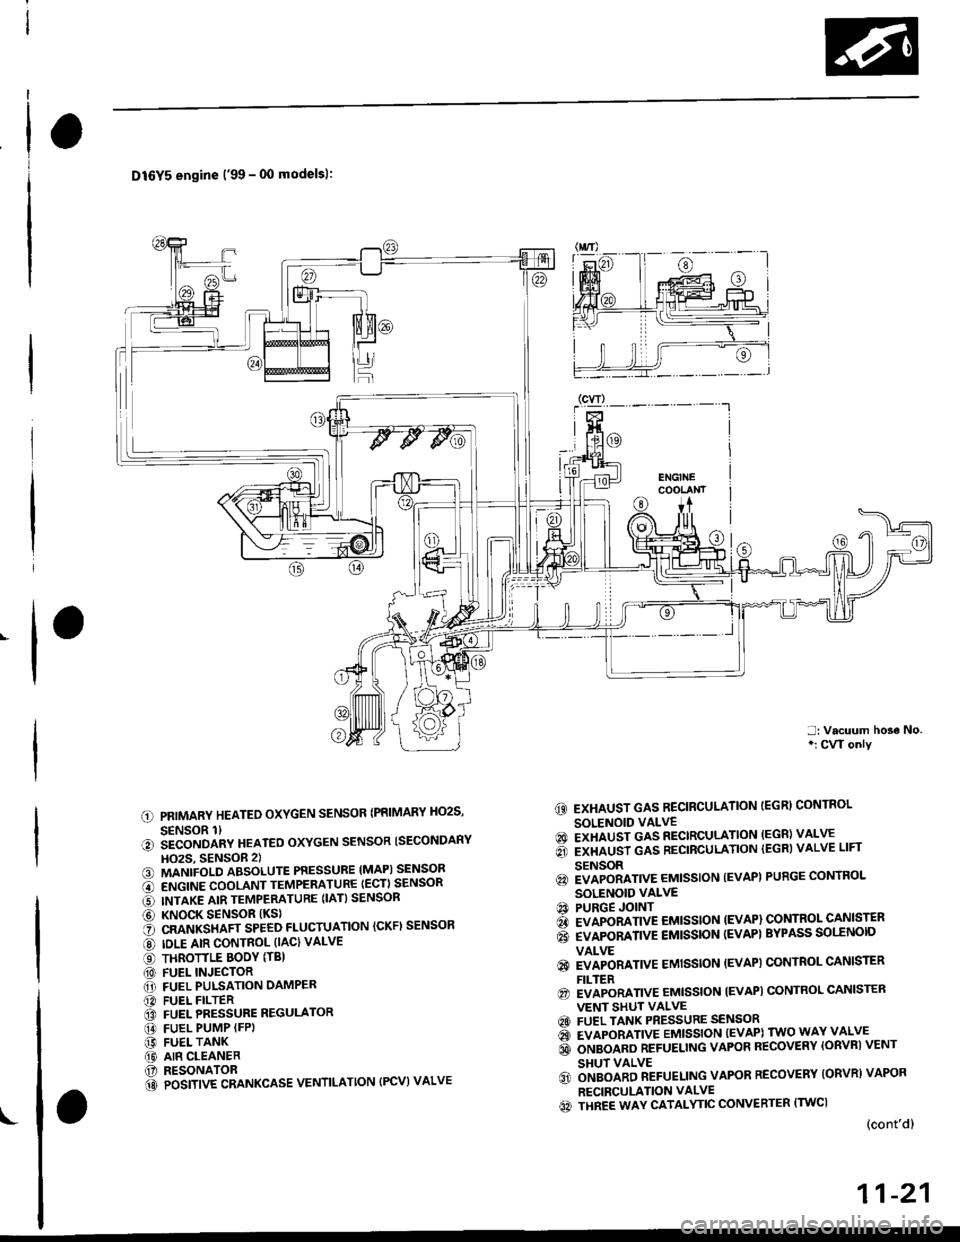 HONDA CIVIC 1996 6.G User Guide D16Y5 engine (99 - 00 modelsl:
O) PRIMARY HEATED OXYGEN SENSOR (PBIMARY HO2S,
SENSOR 1)
O SECONDARY HEATEO OXYGEN SENSOR {SECONDARY
HO2S. SENSOR 2)
6] MANIFOLD ABSOLUTE PRESSURE IMAPI SENSOR
rO CruCI